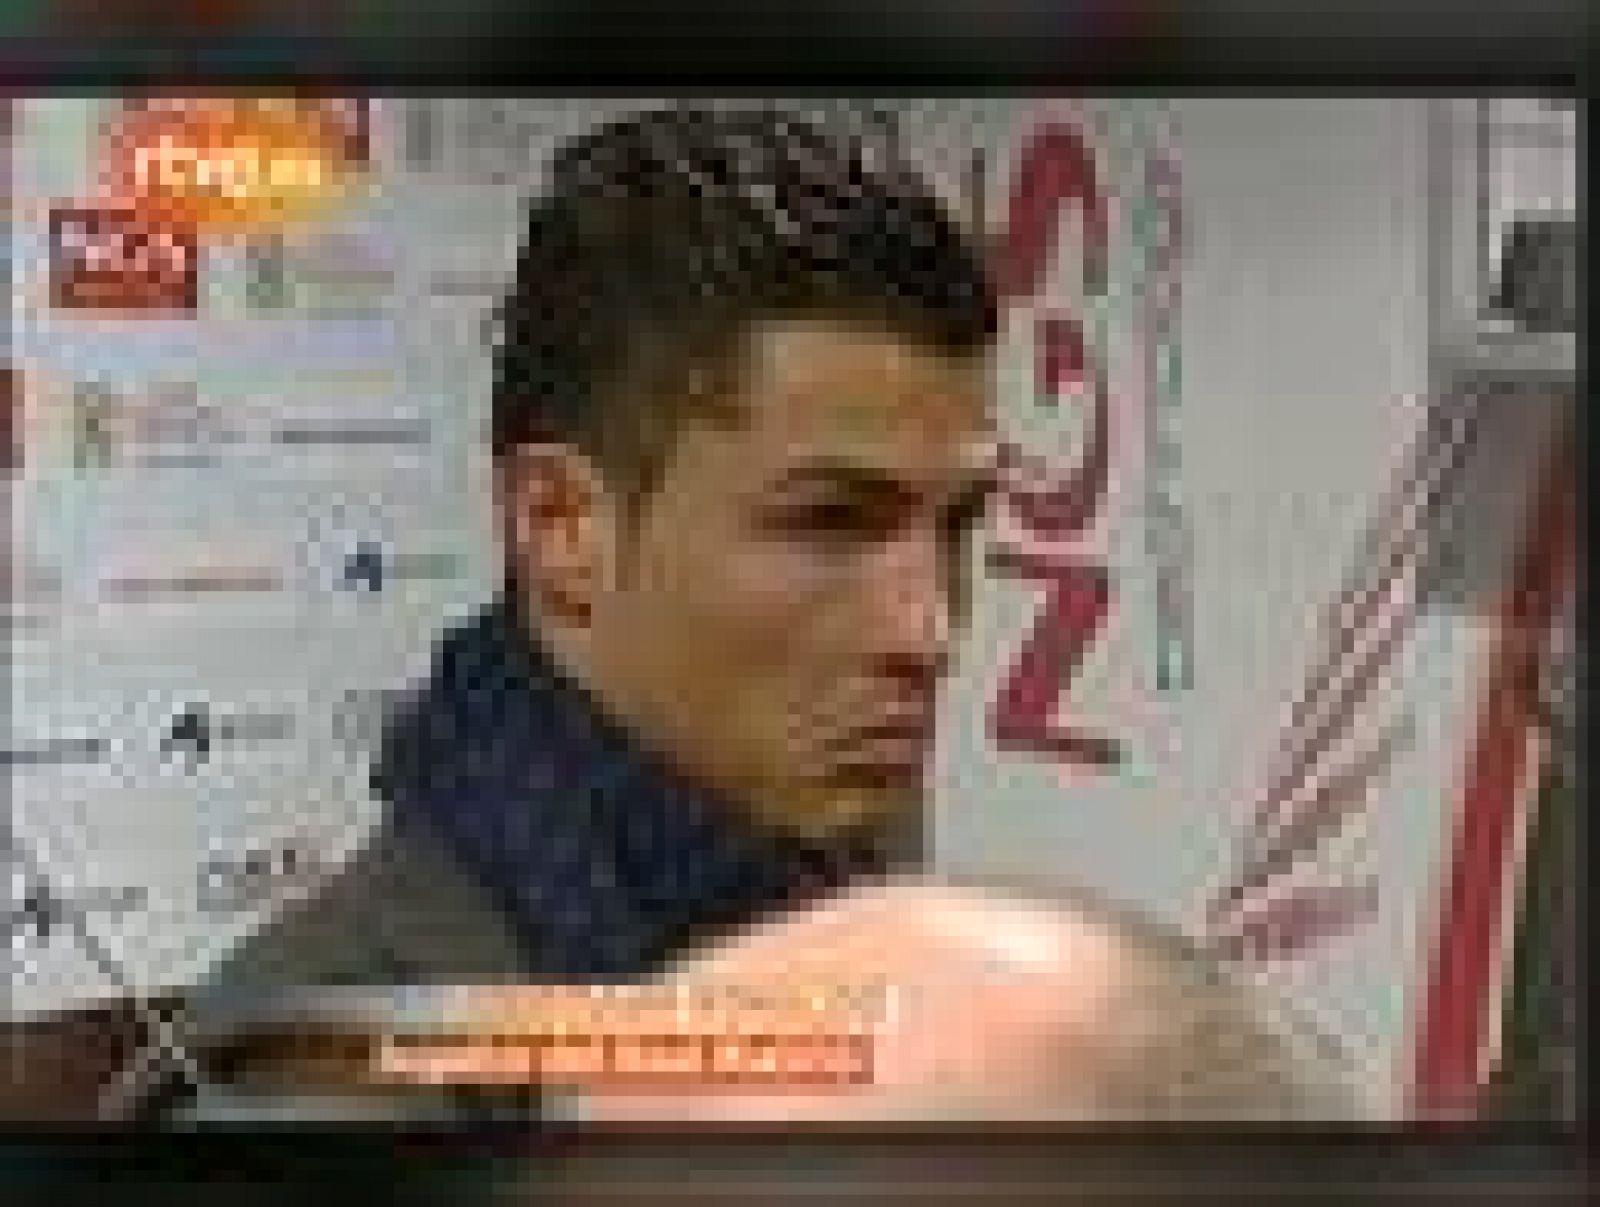 Sin programa: Ronaldo pide "multar" al Reyno de Navarra | RTVE Play